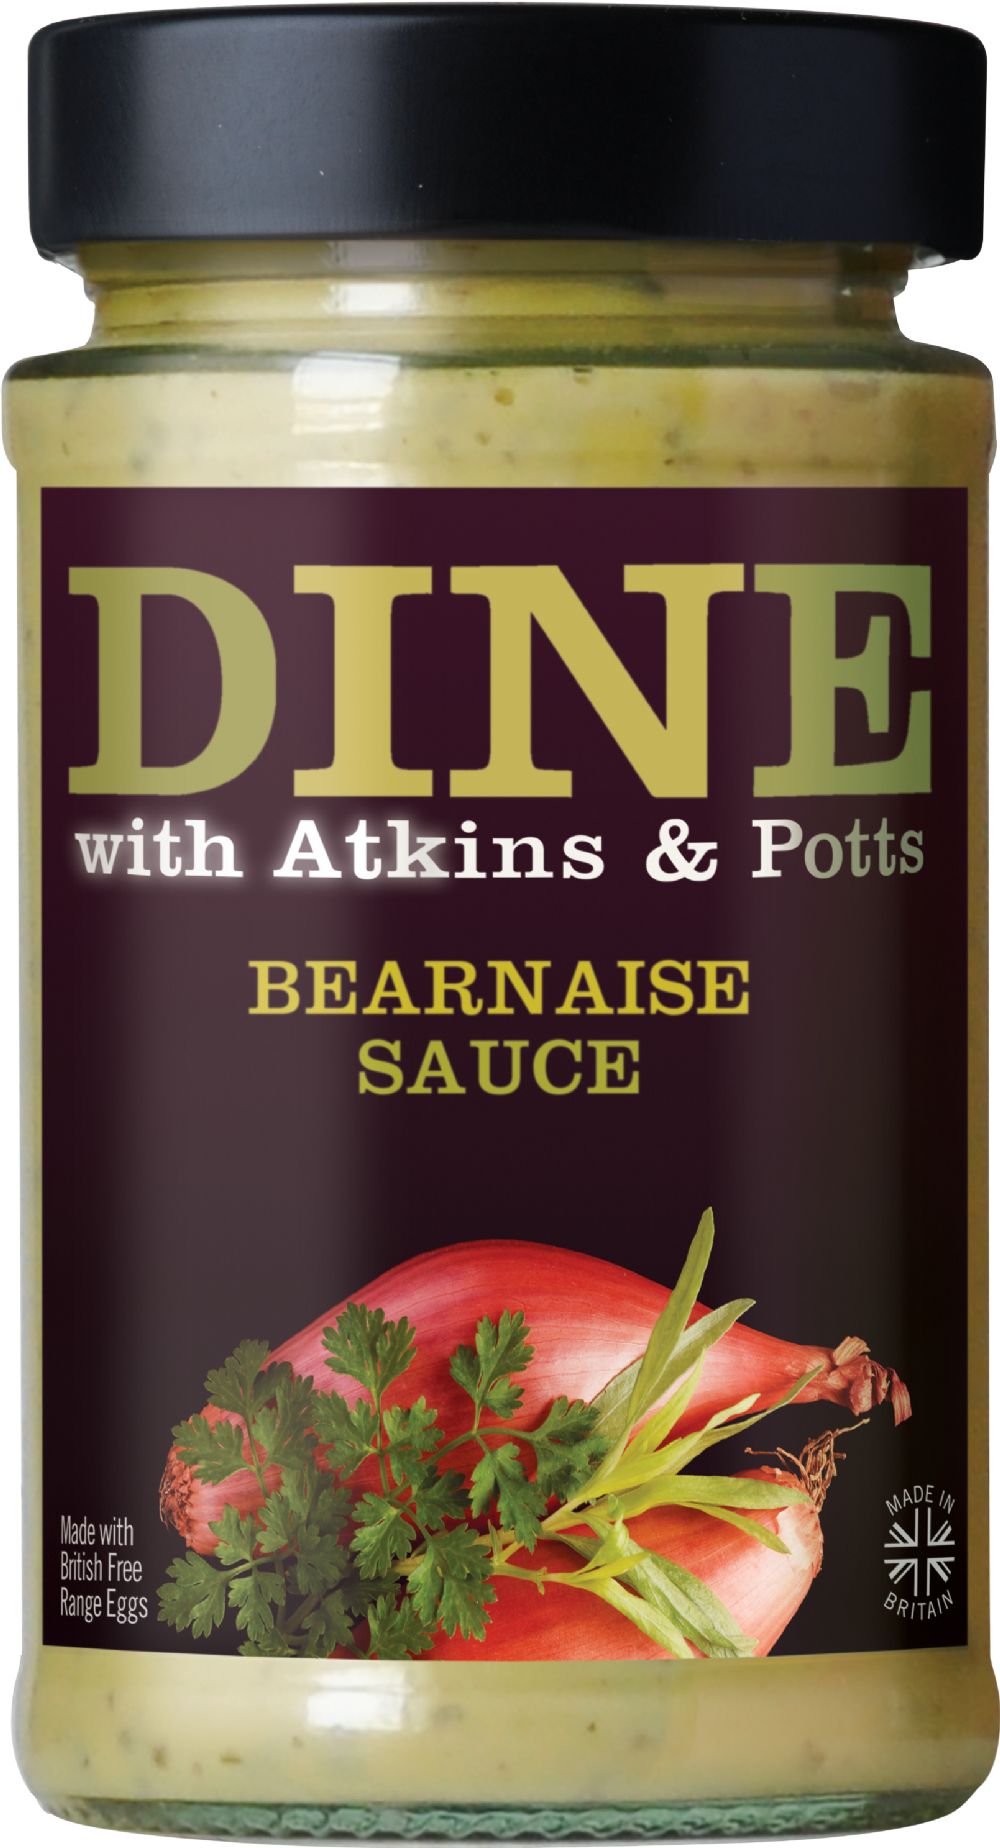 Atkins & Potts Bearnaise